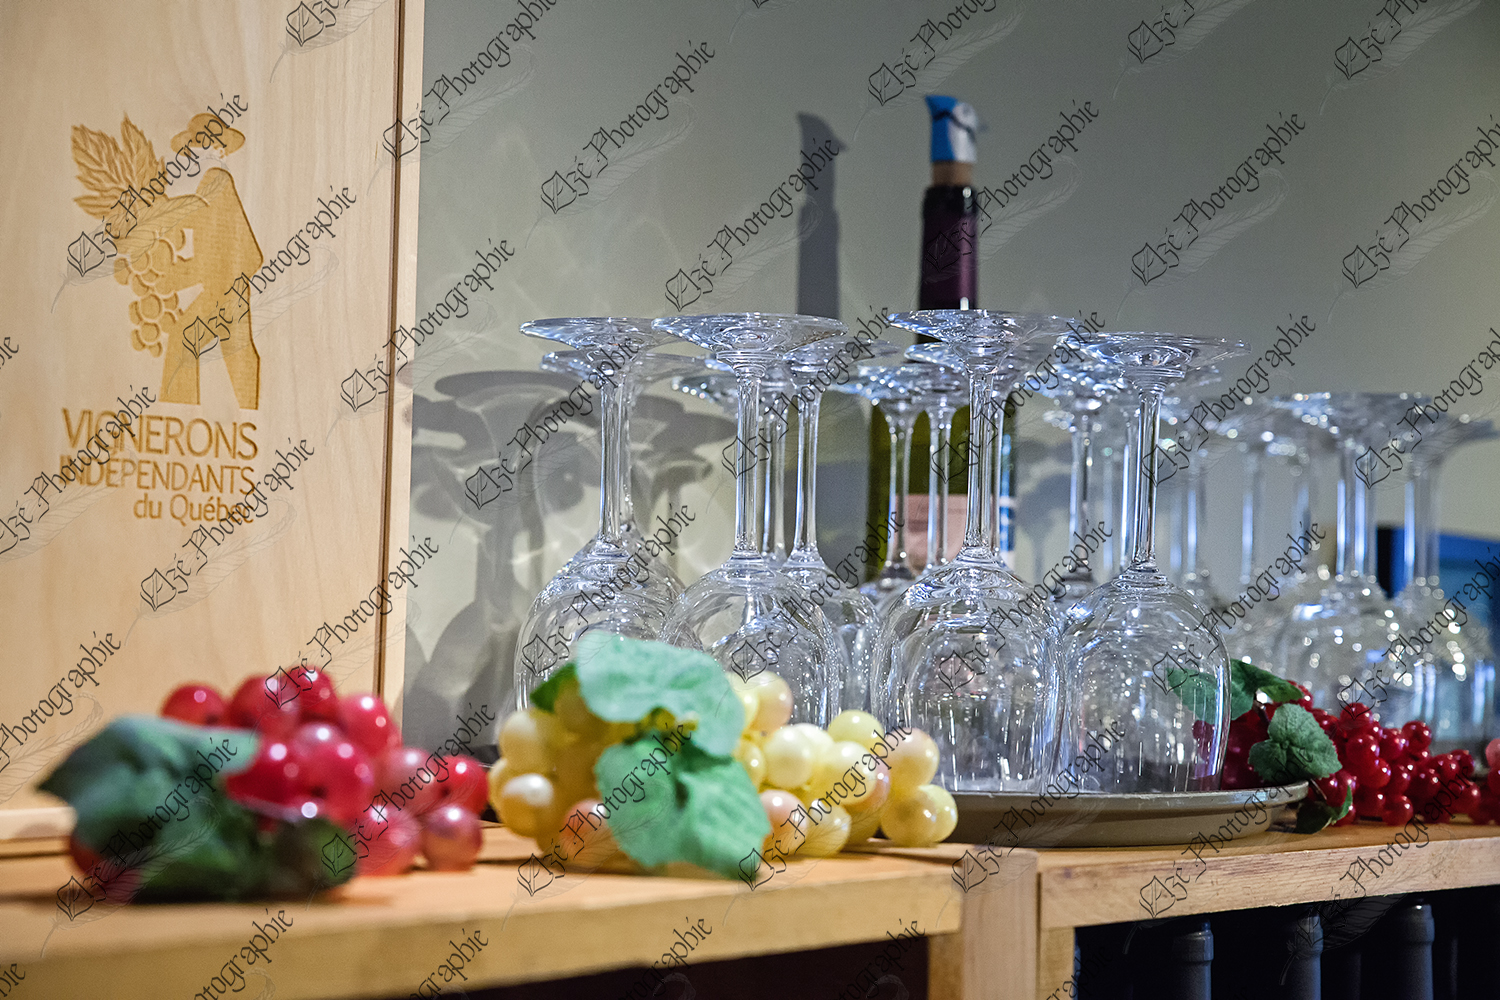 elze_photo_3243_vigneron_independant_coupe_wine_glass_tray